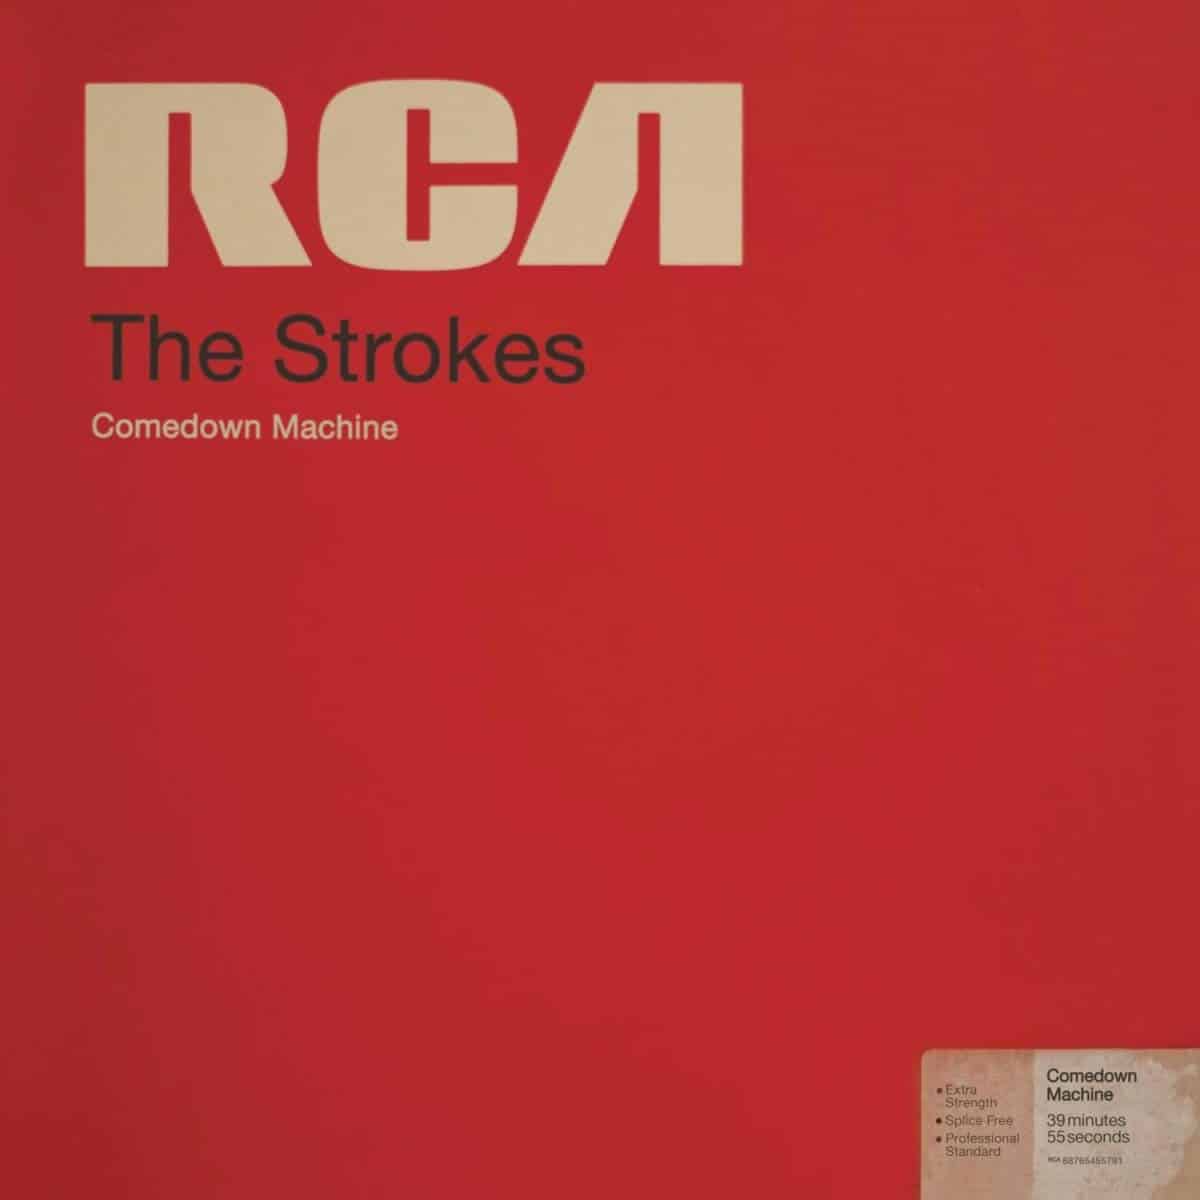 The-Strokes-Comedown-Machine-vinyl-record-album-front